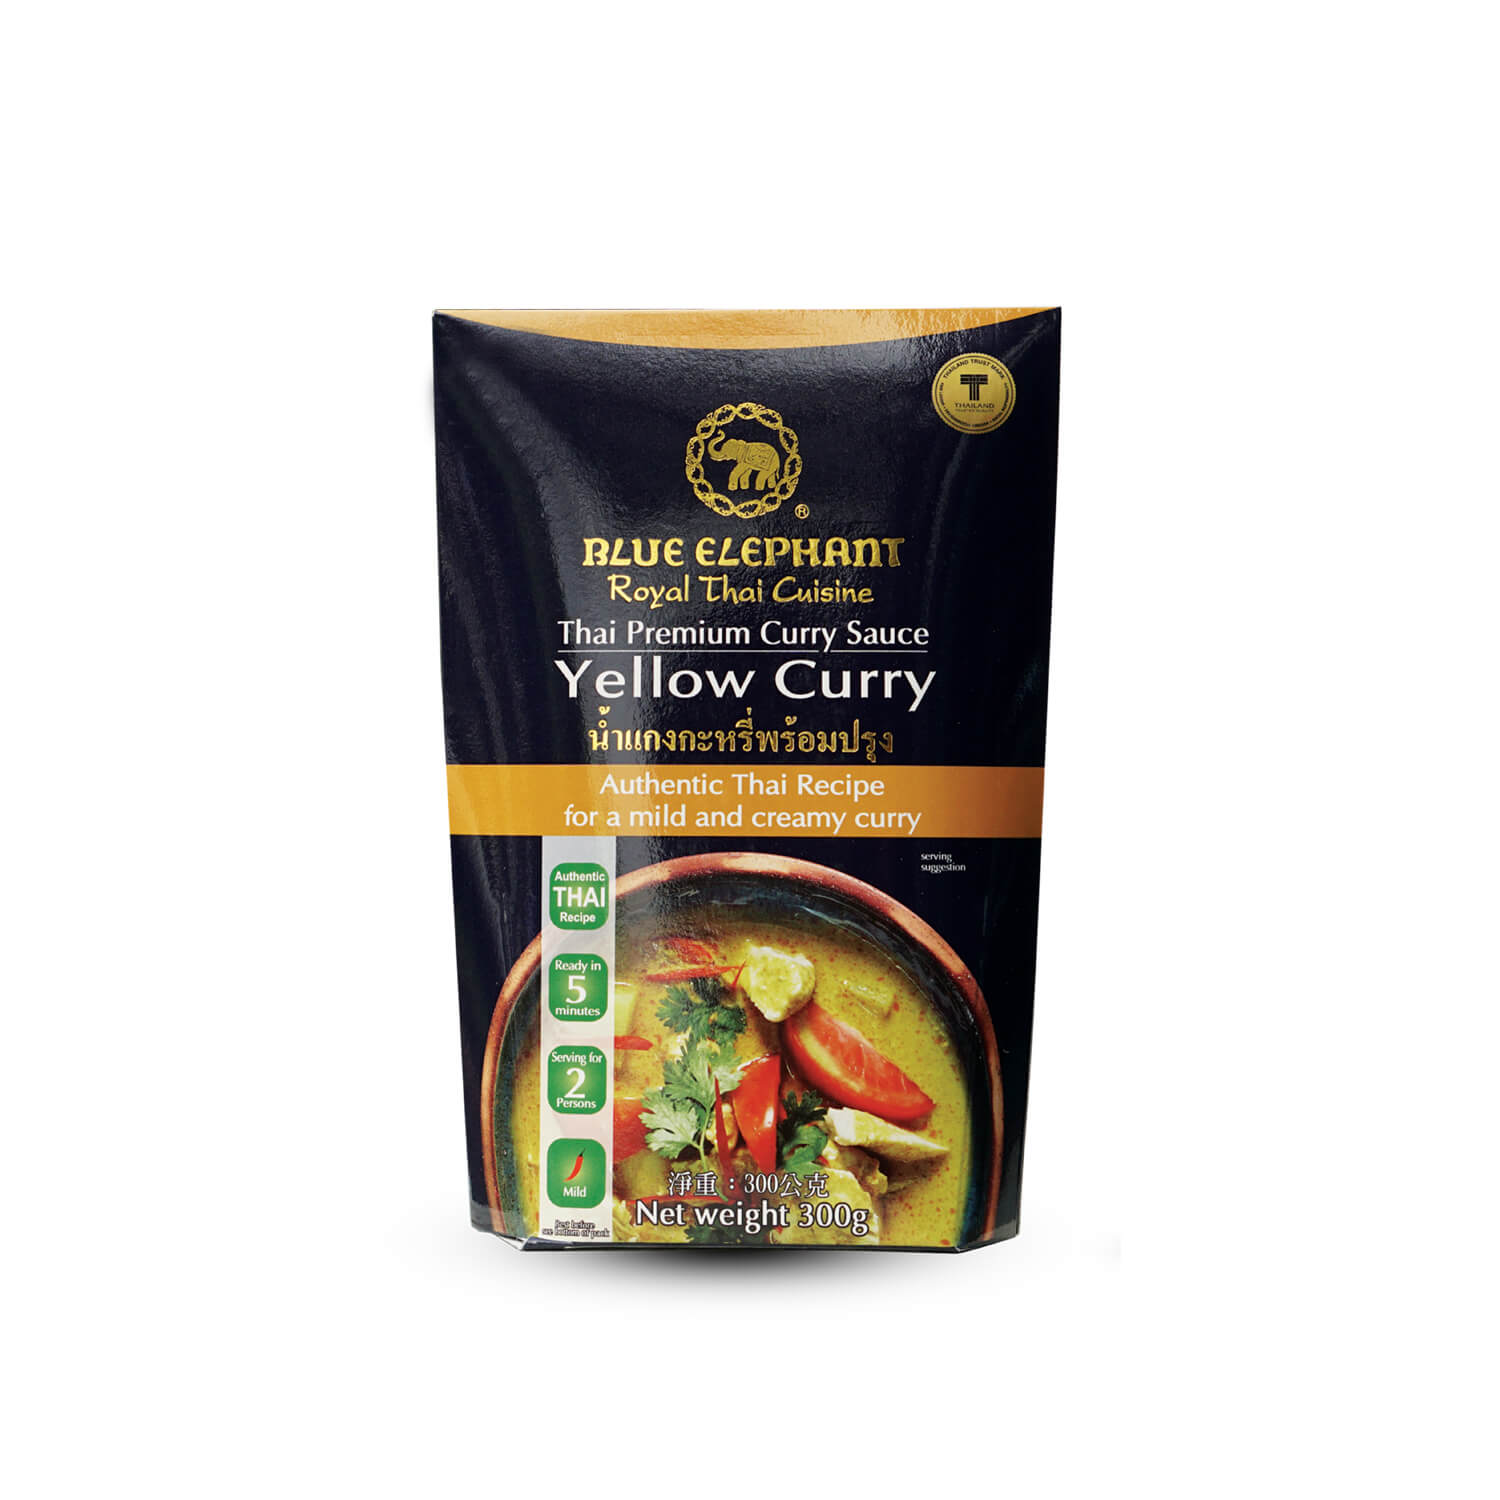 BLUE ELEPHANT Thai Premium Curry Sauce Yellow Curry 300g_免税价格_亿点免税